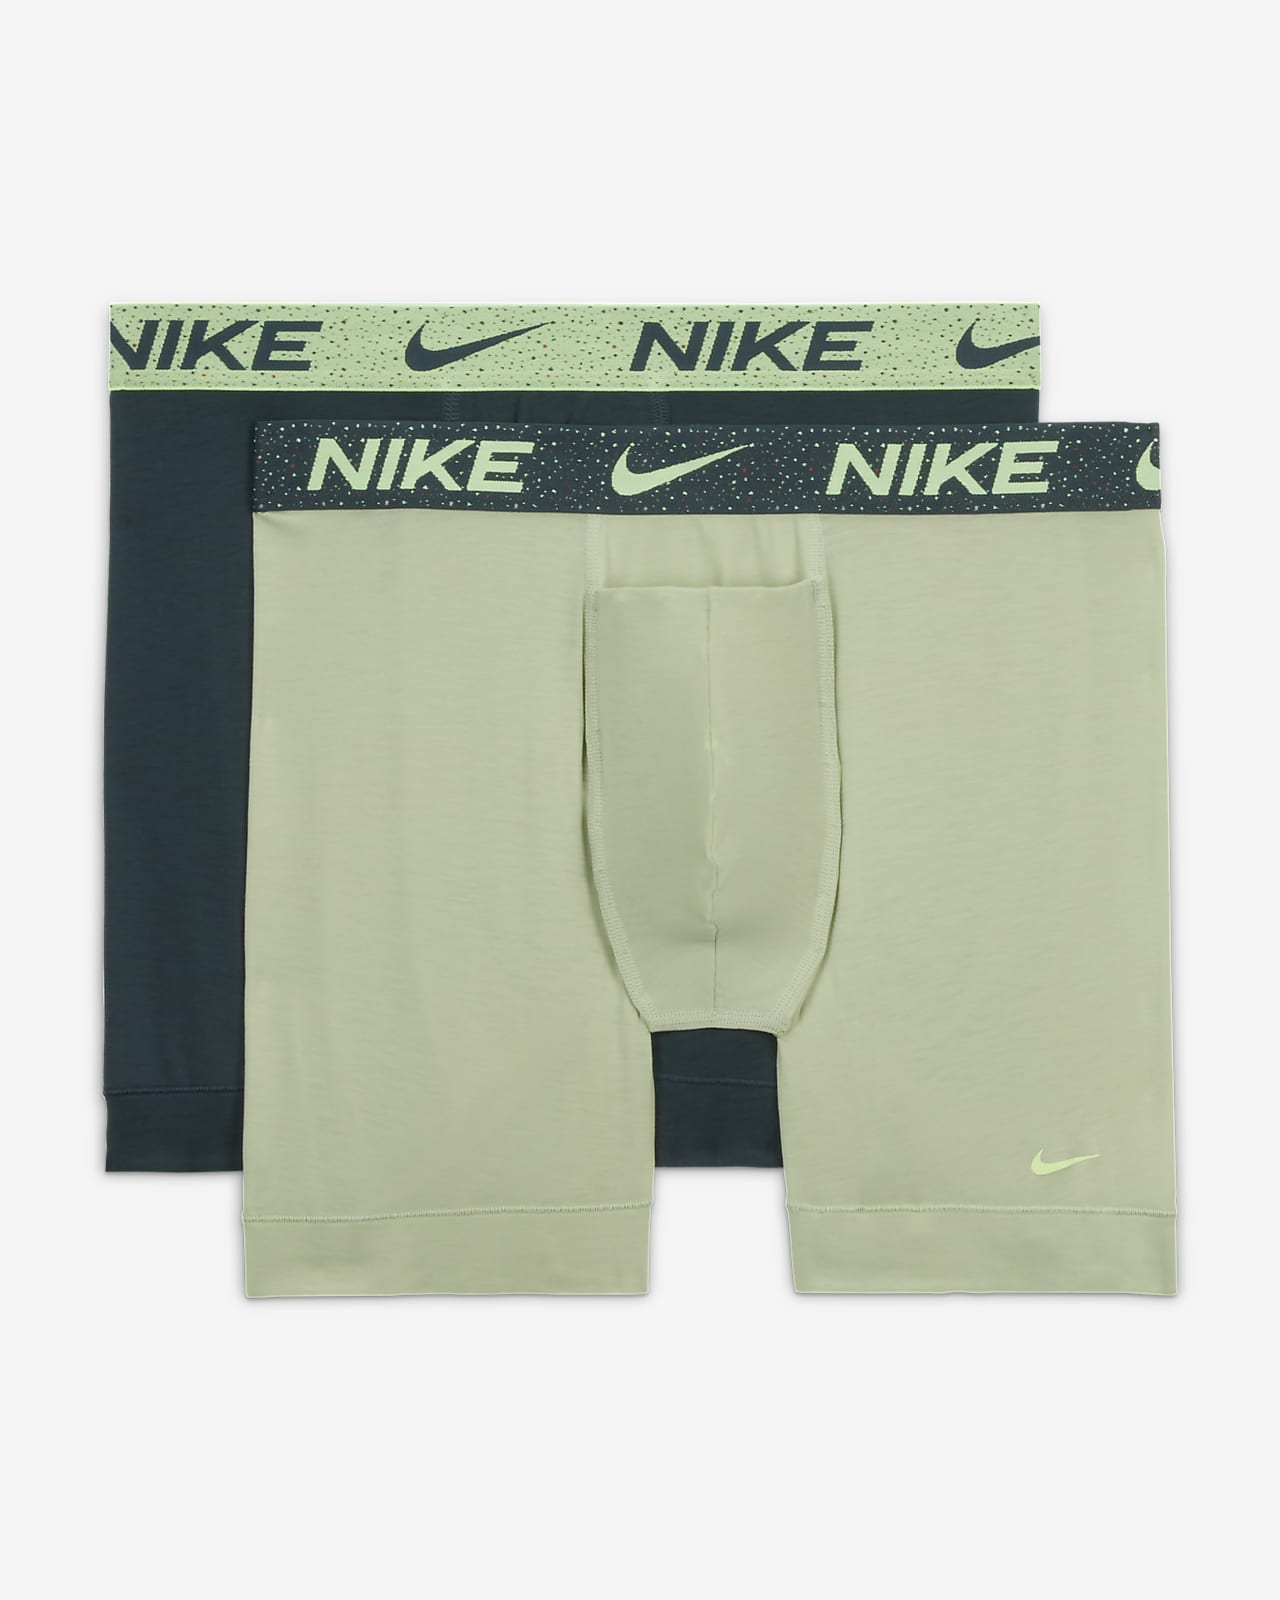 Nike / Men's Dri-FIT ReLuxe Boxer Brief 2-pack - Underwear